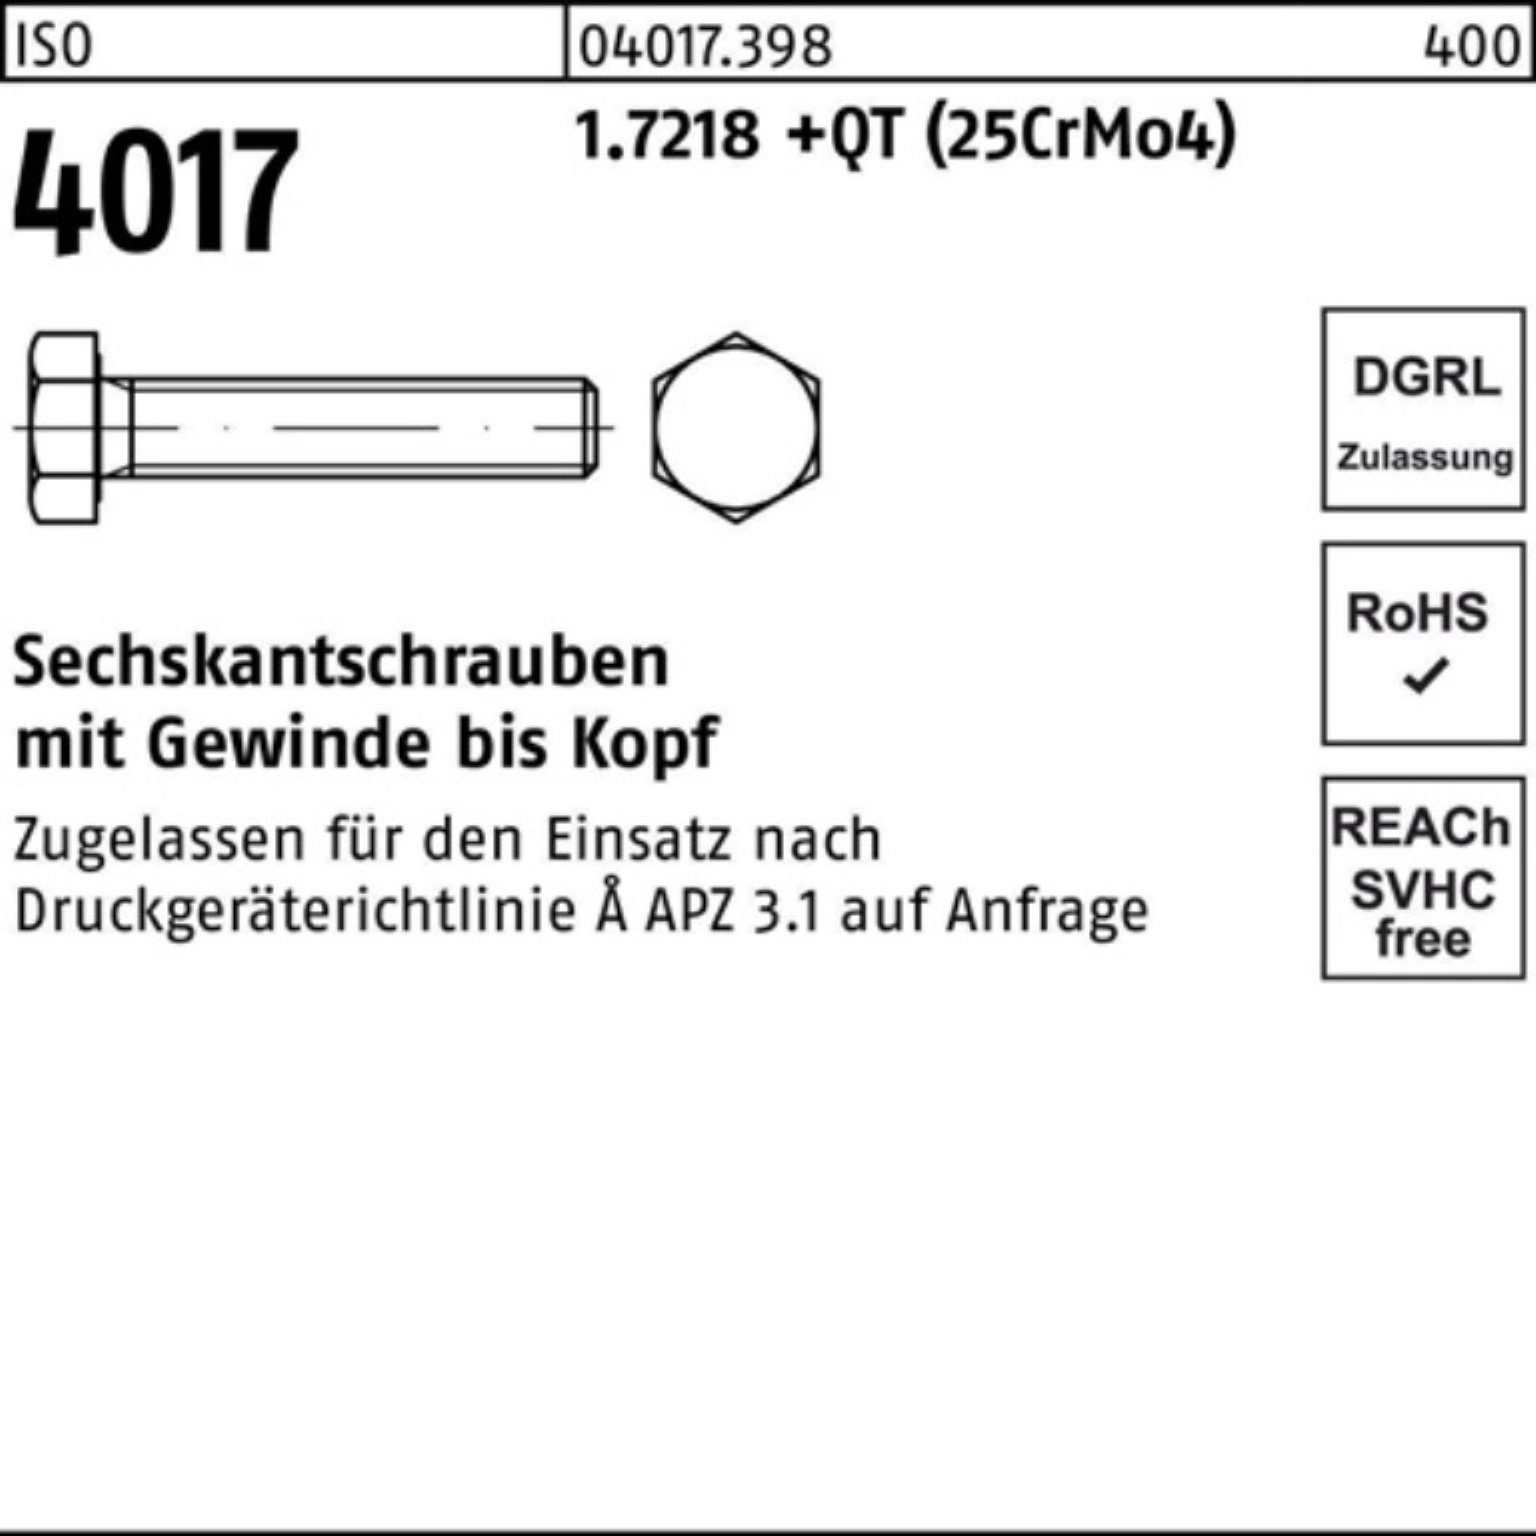 Bufab Sechskantschraube 100er Pack 1.7218 (25CrMo4) 180 4017 ISO Sechskantschraube M20x +QT VG